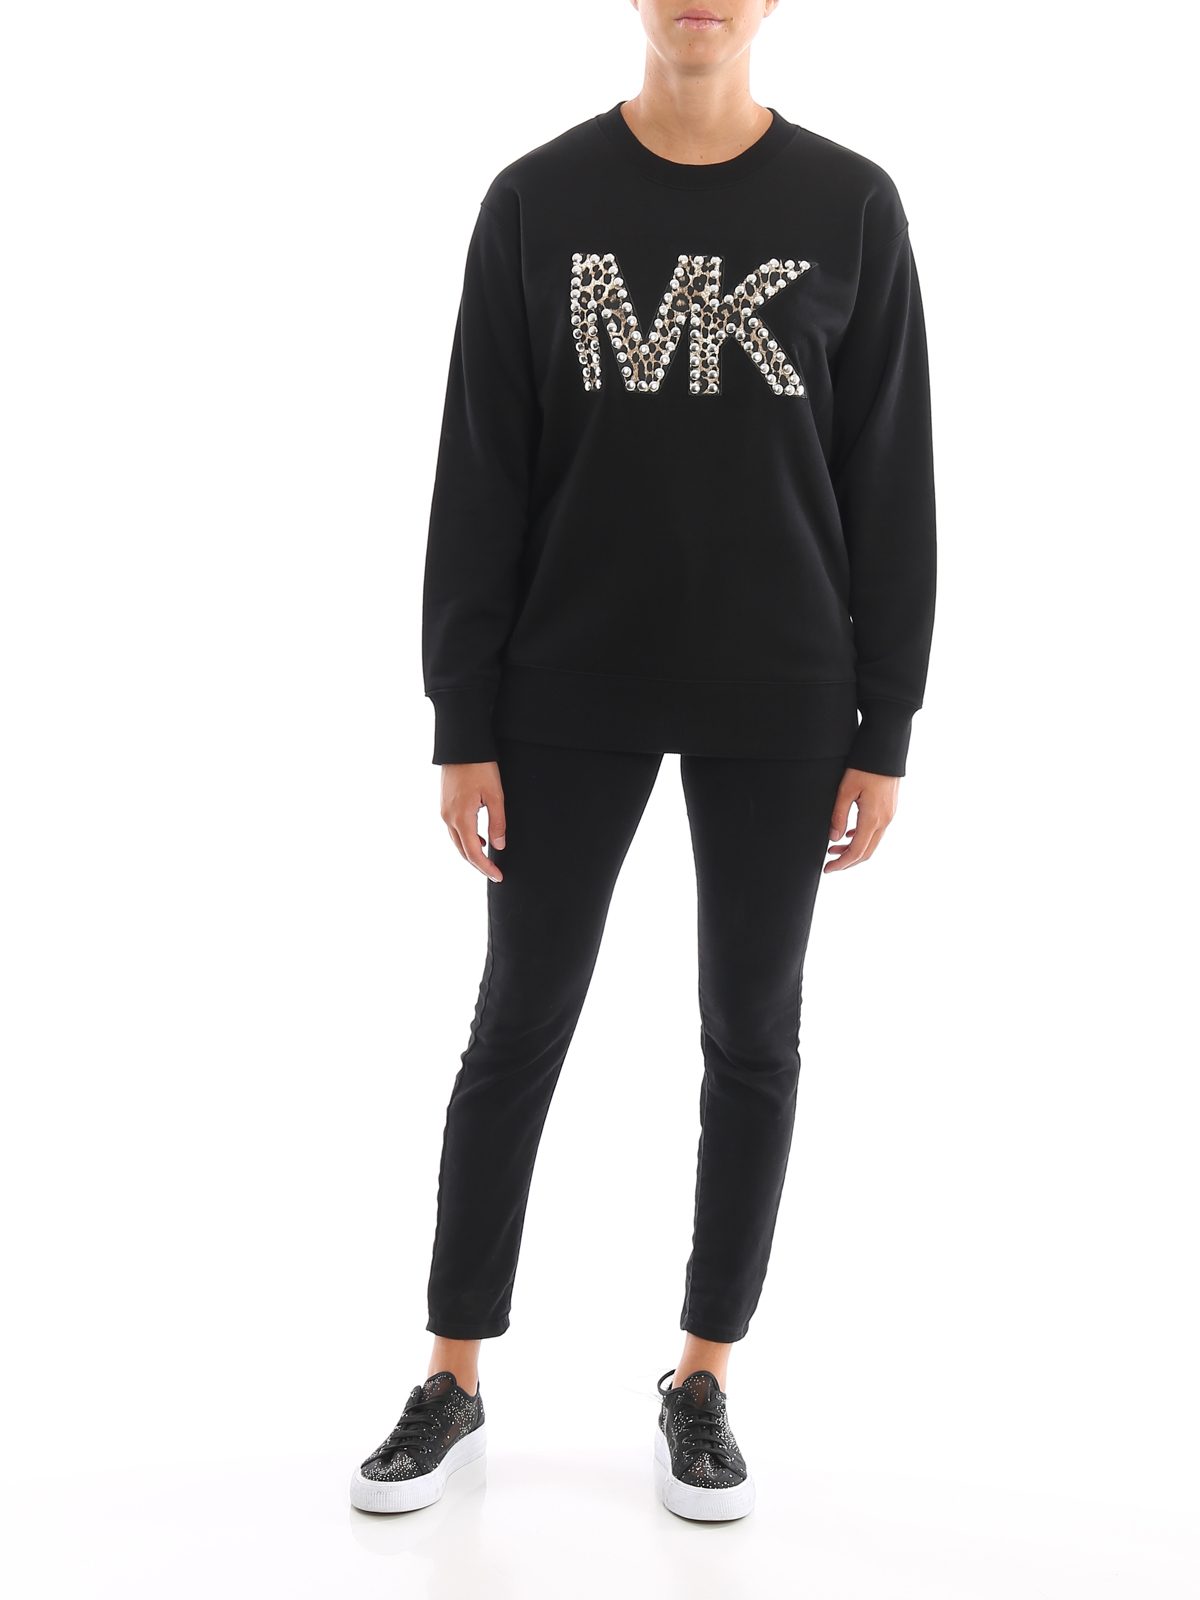 mk sweaters